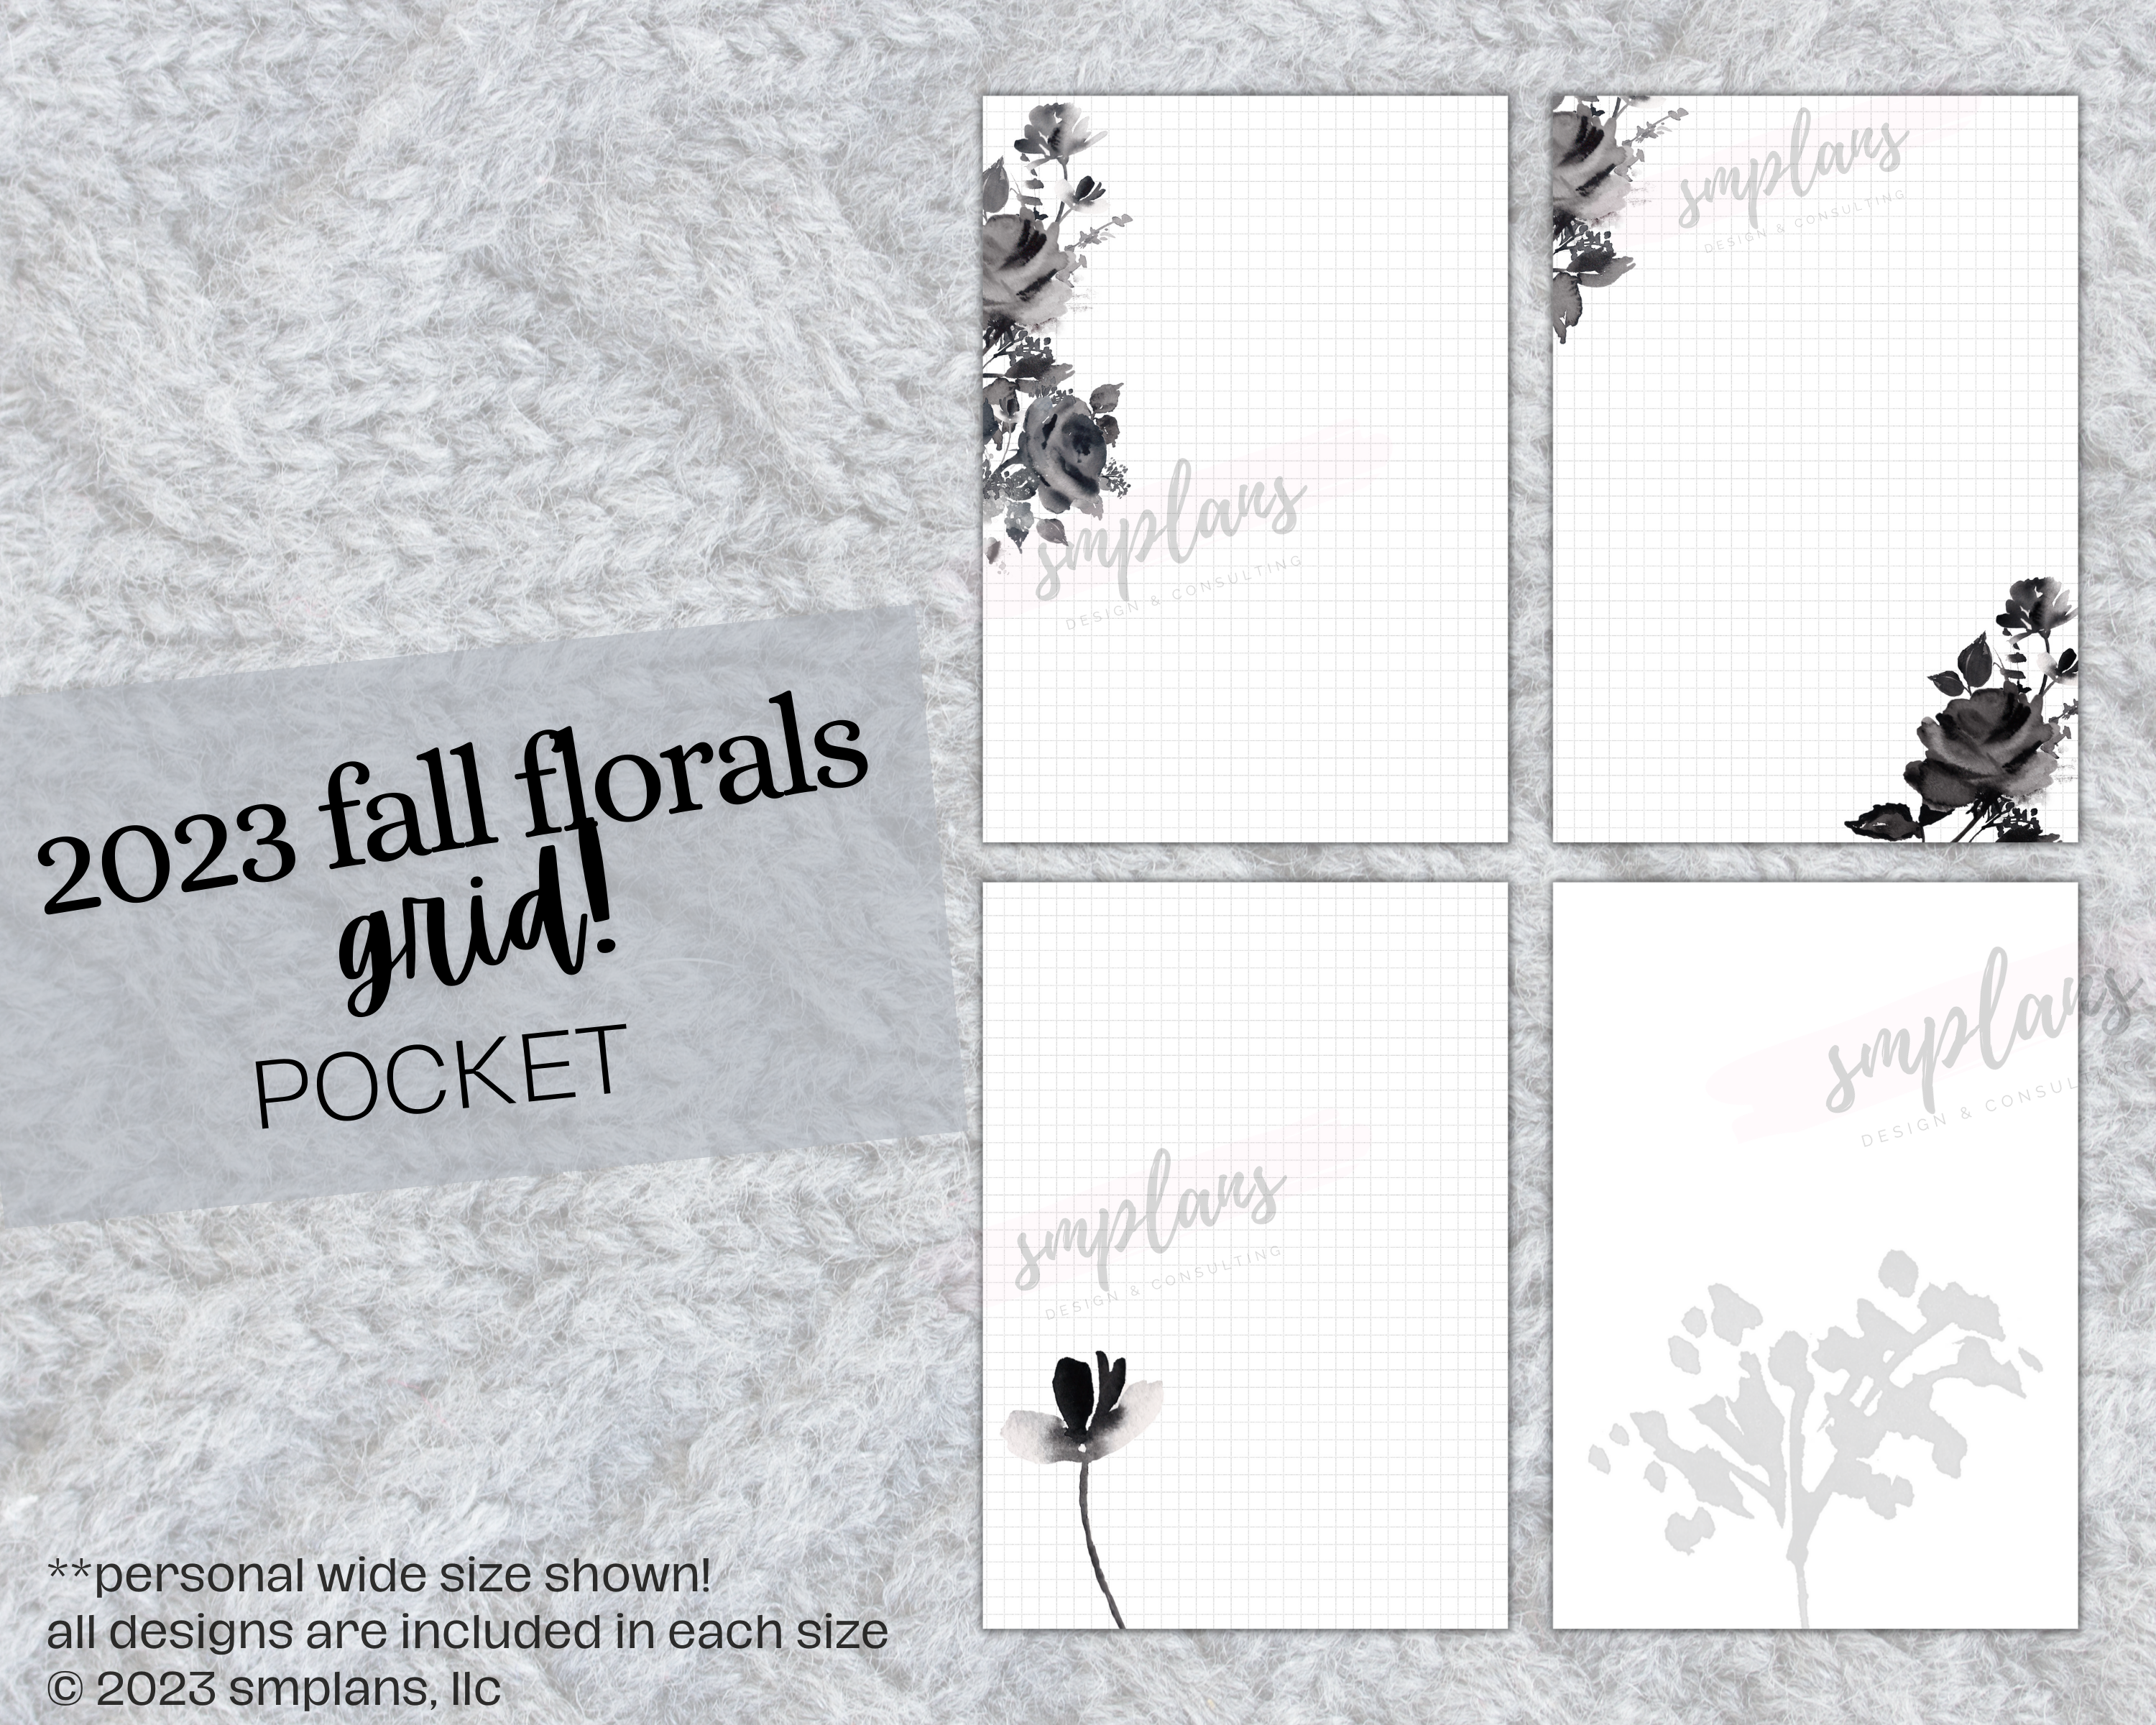 Louis Vuitton Flower pattern stencil multiple size sheets LV